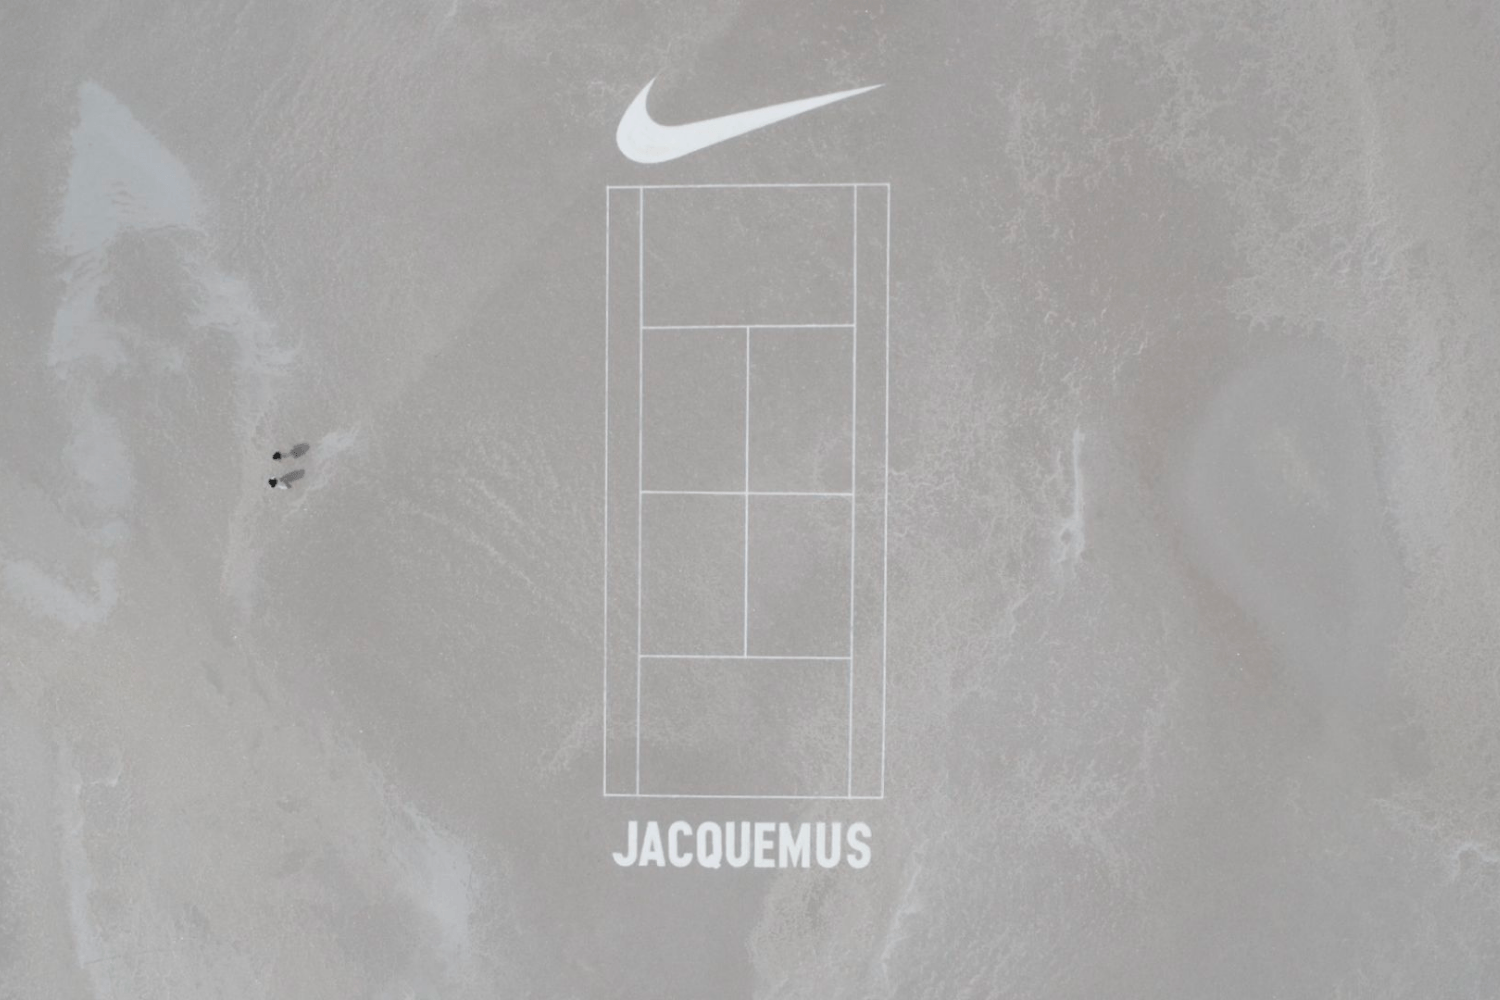 Eerste Jacquemus x Nike collab dropt binnenkort